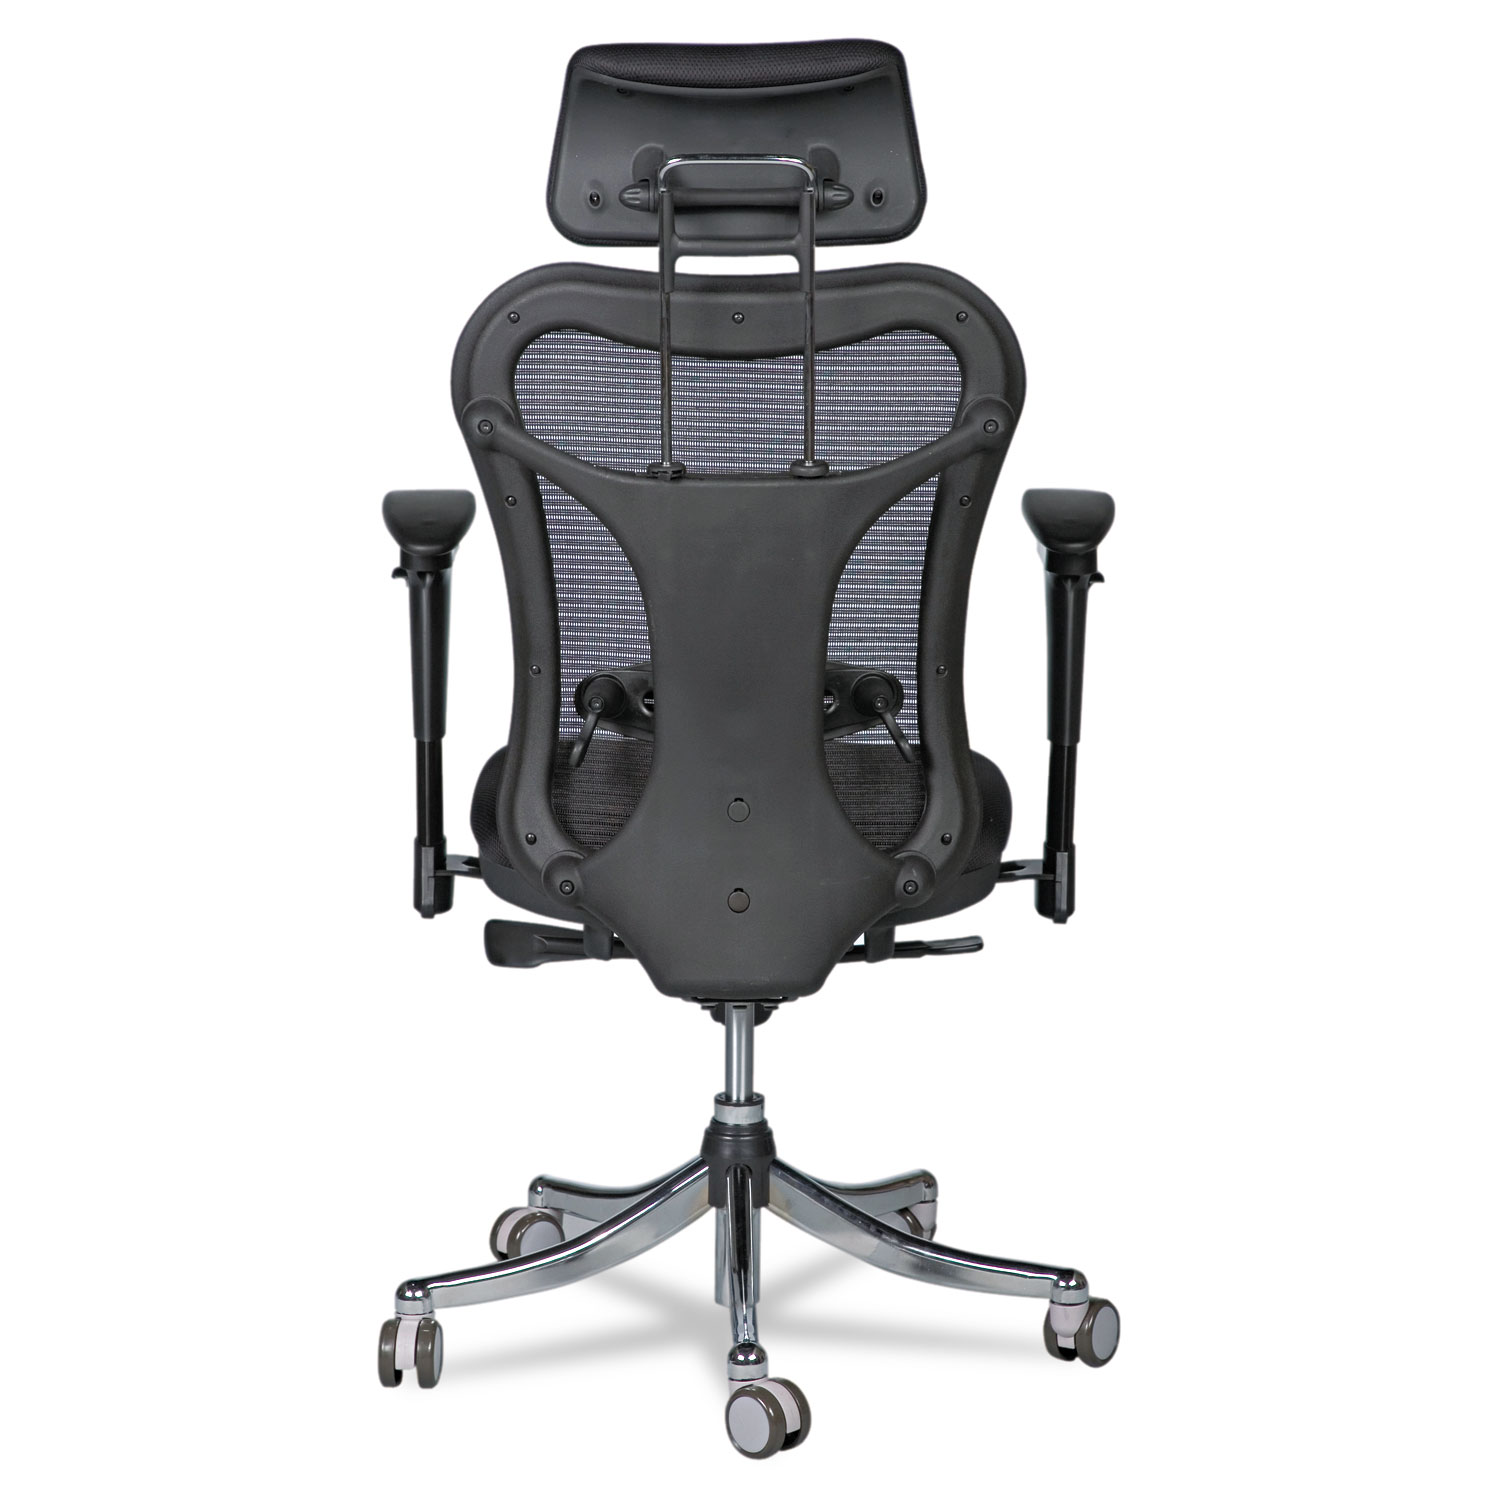 Ergo Ex Executive Office Chair, Mesh Back/Upholstered Seat, Black/Chrome